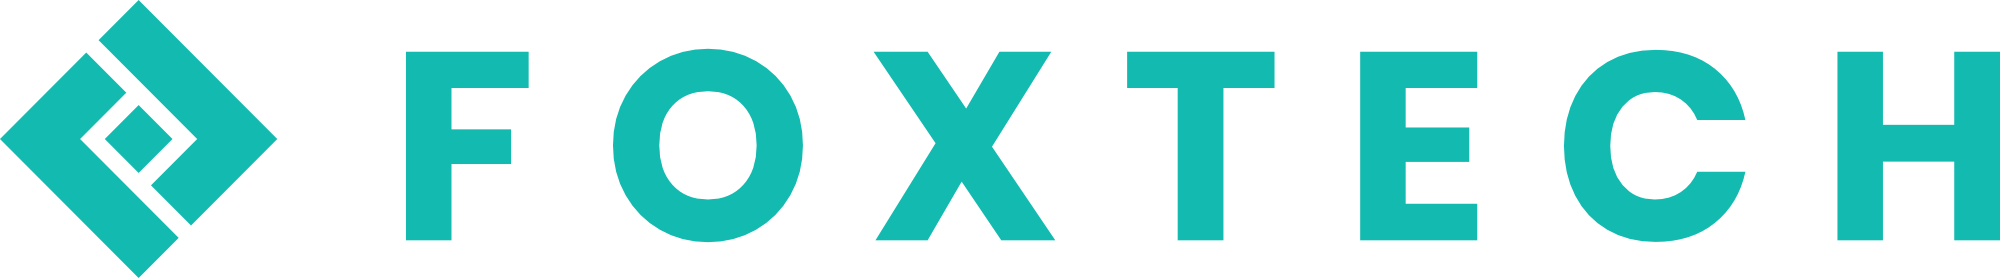 Logo of Foxtrot Technologies